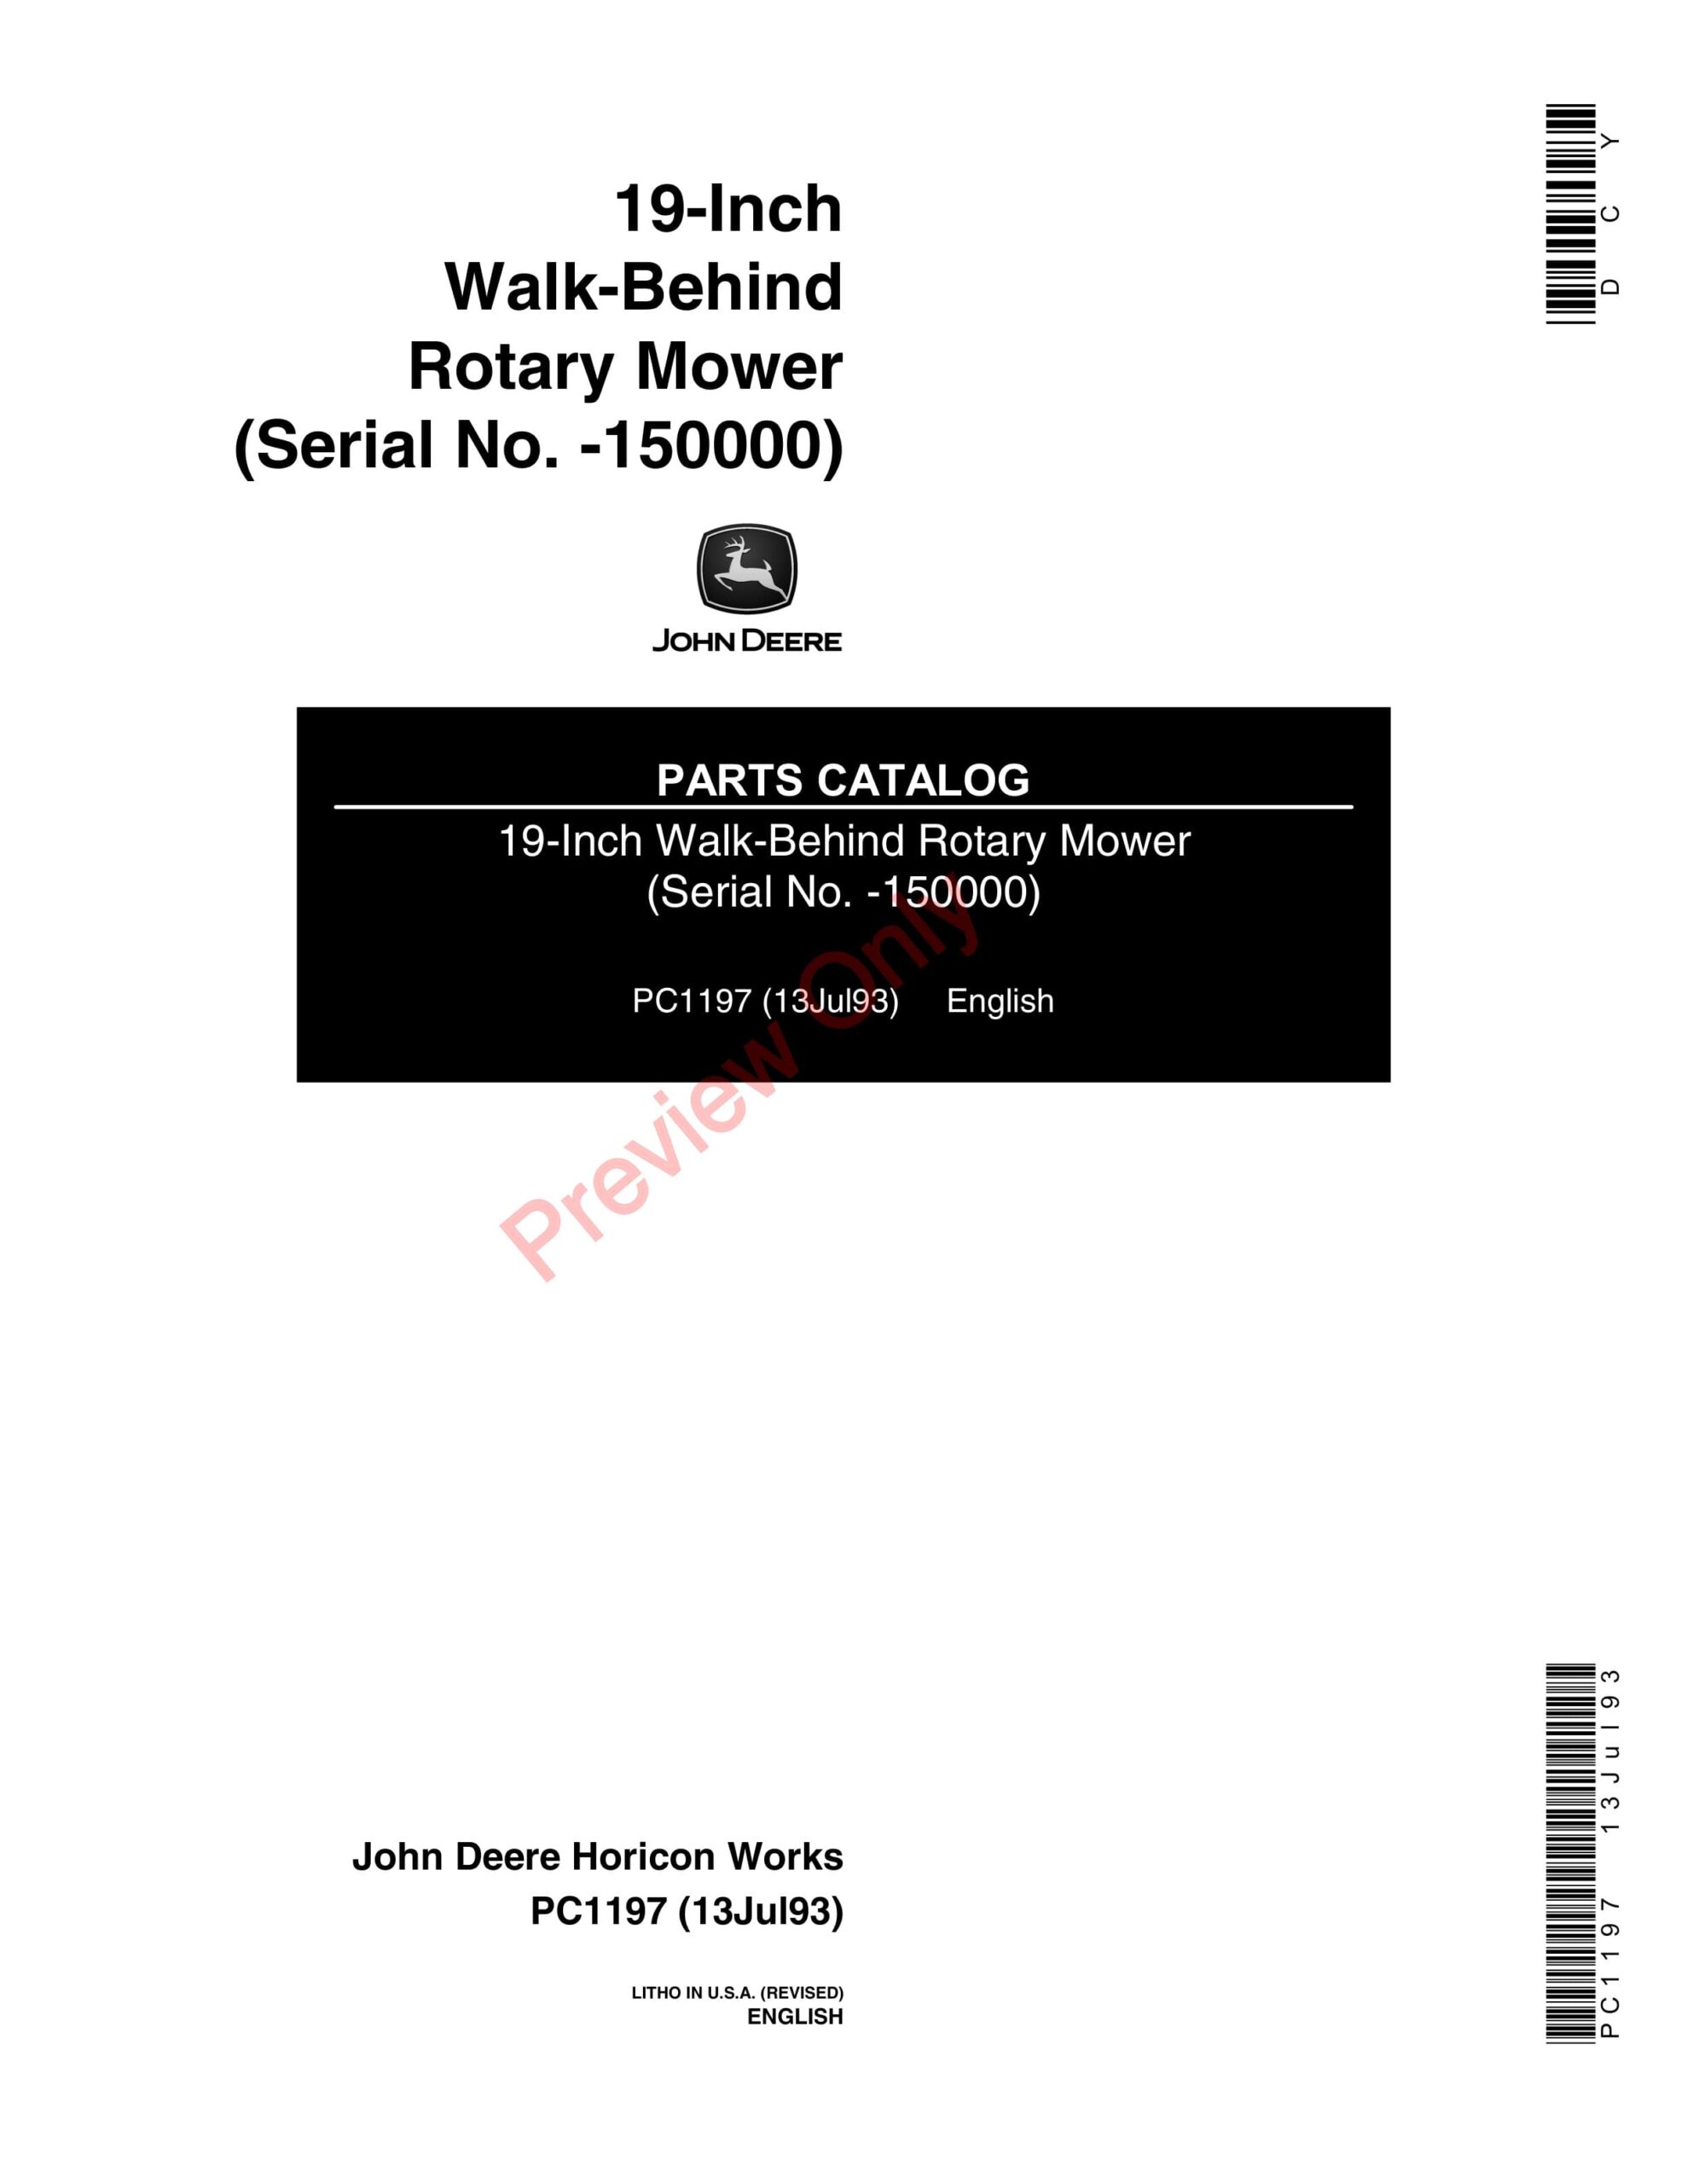 John Deere 19-Inch Walk-Behind Mower Parts Catalog PC1197 13JUL93-1